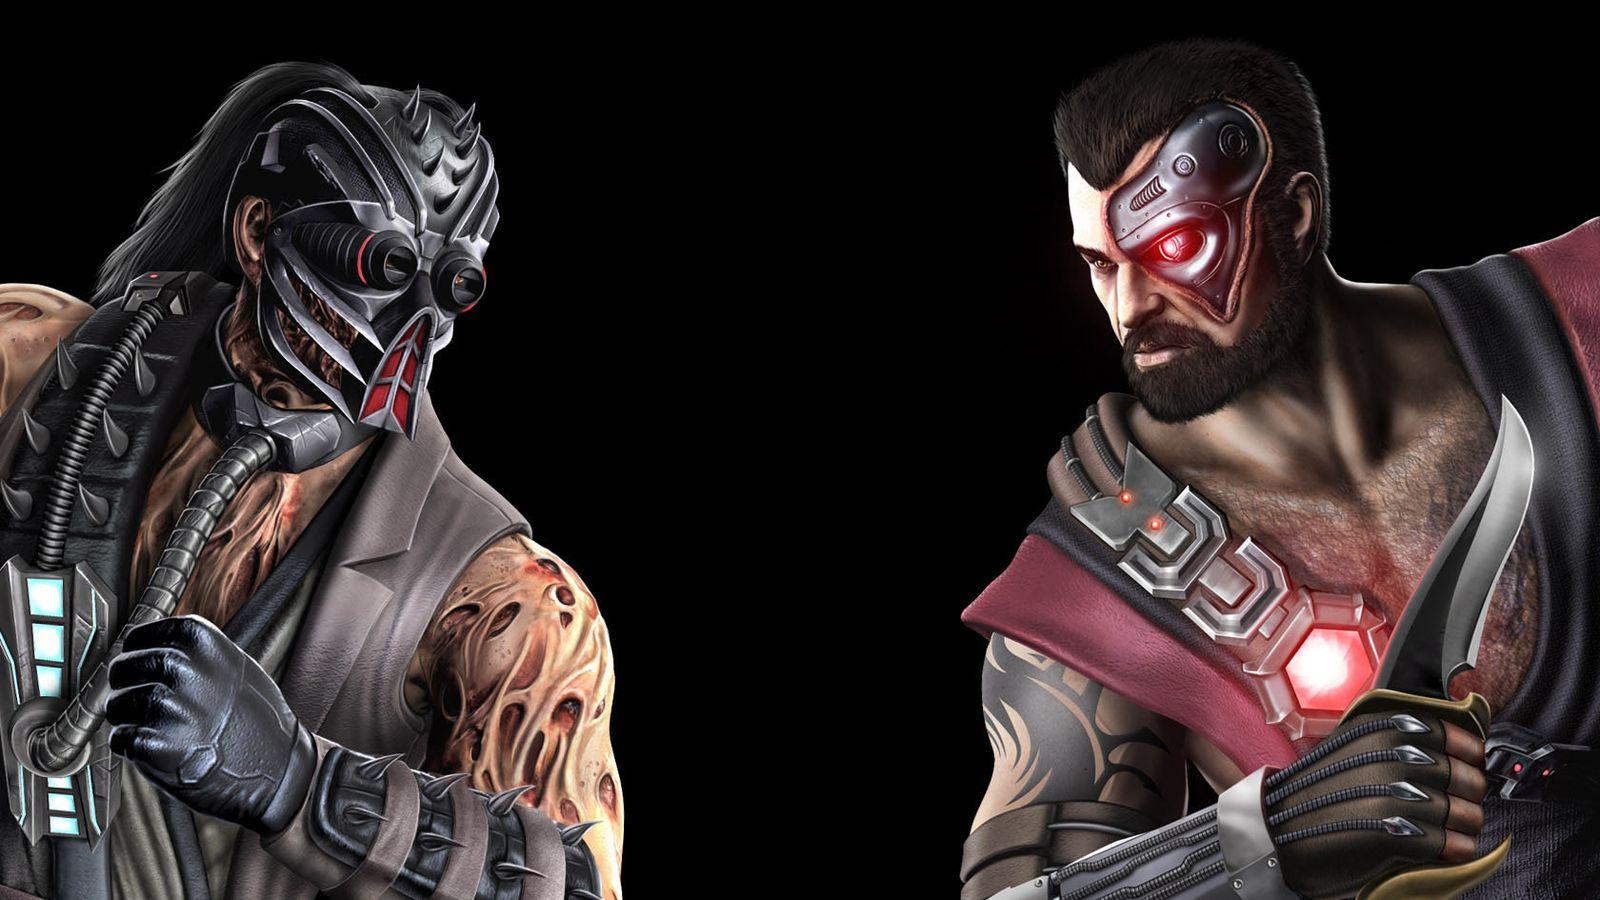 Mortal Kombat Wallpaper. Mortal Kombat Picture: Kabal VS Kano Mortal Kombat Wallpaper